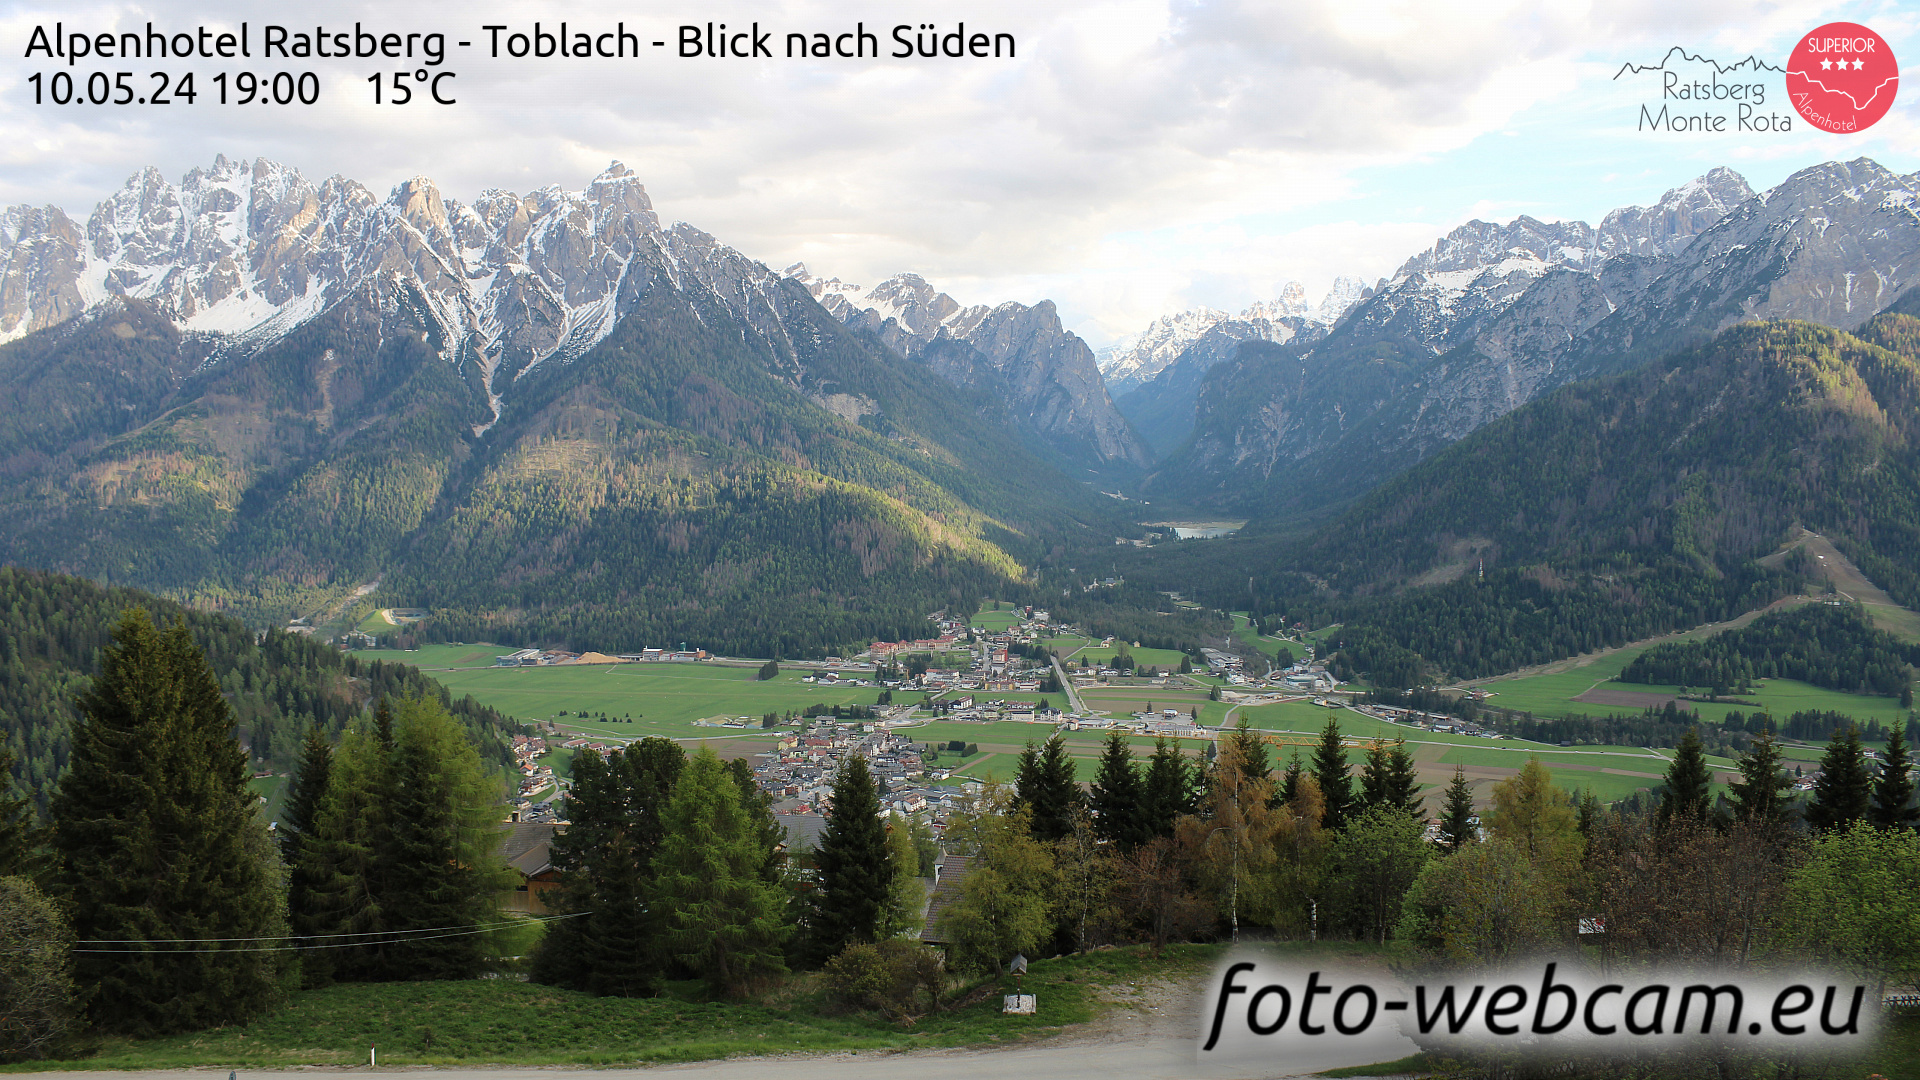 Toblach (Dolomites) Thu. 19:03